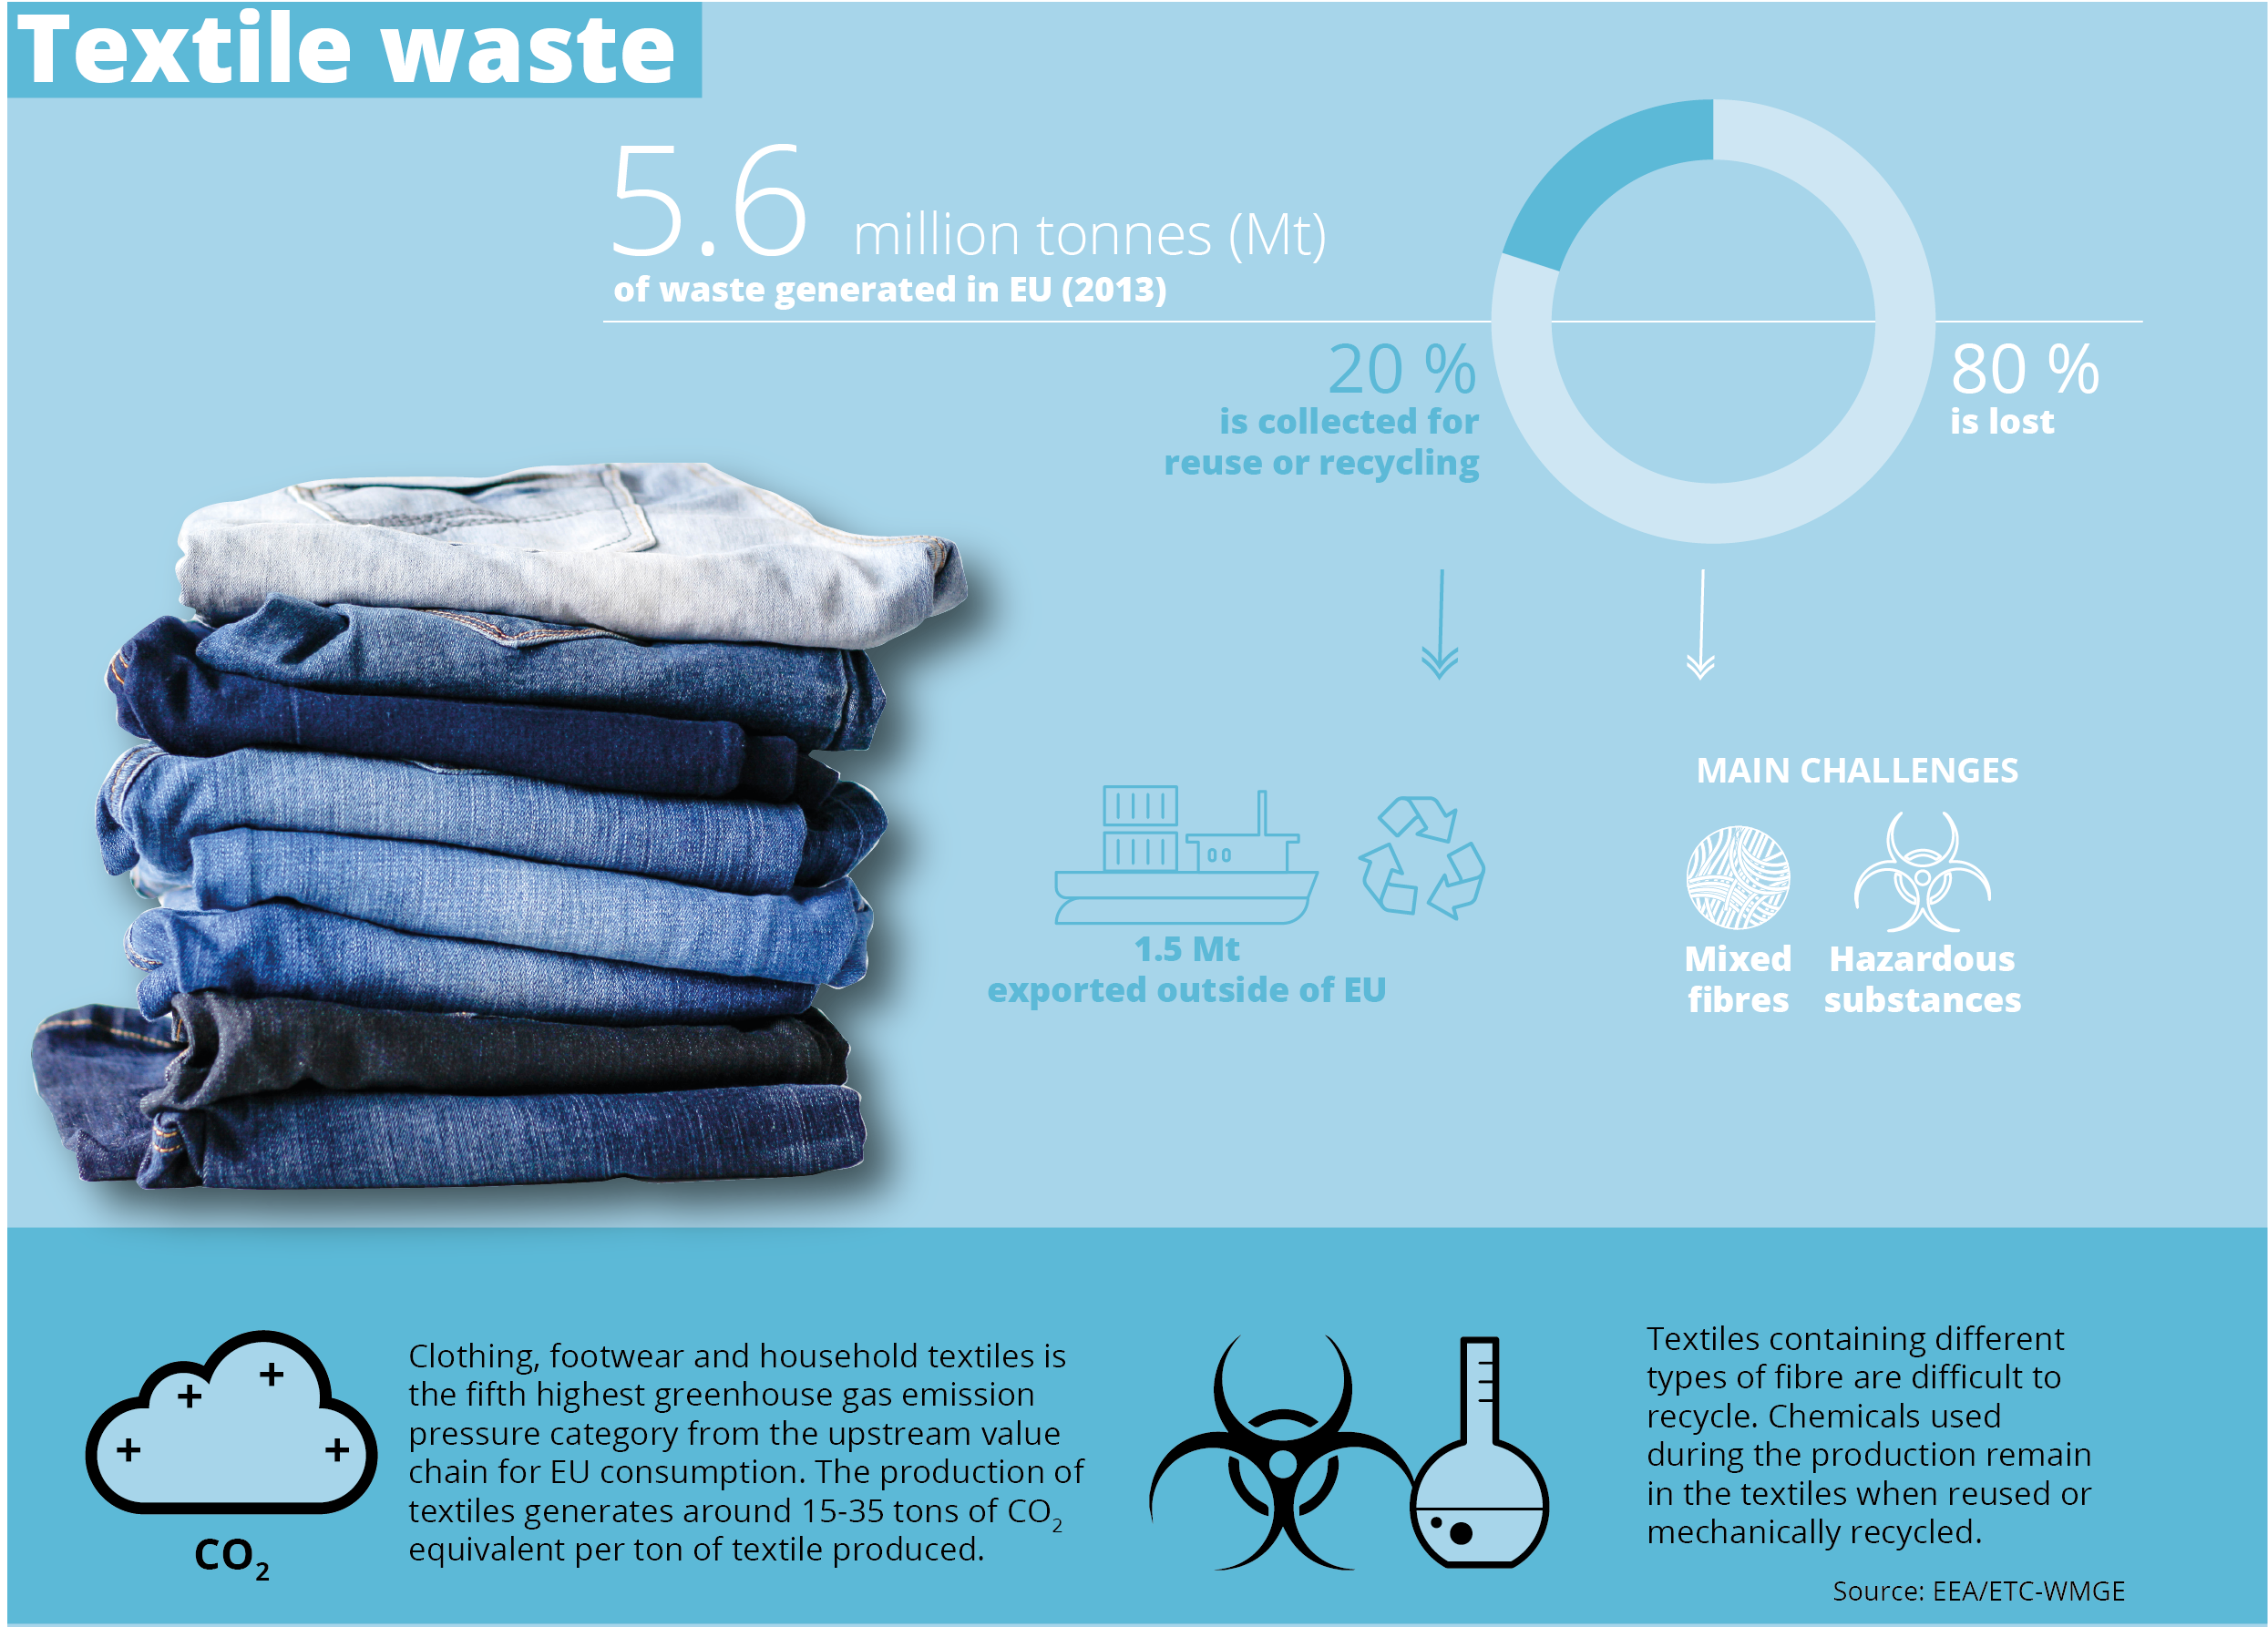  Textile waste